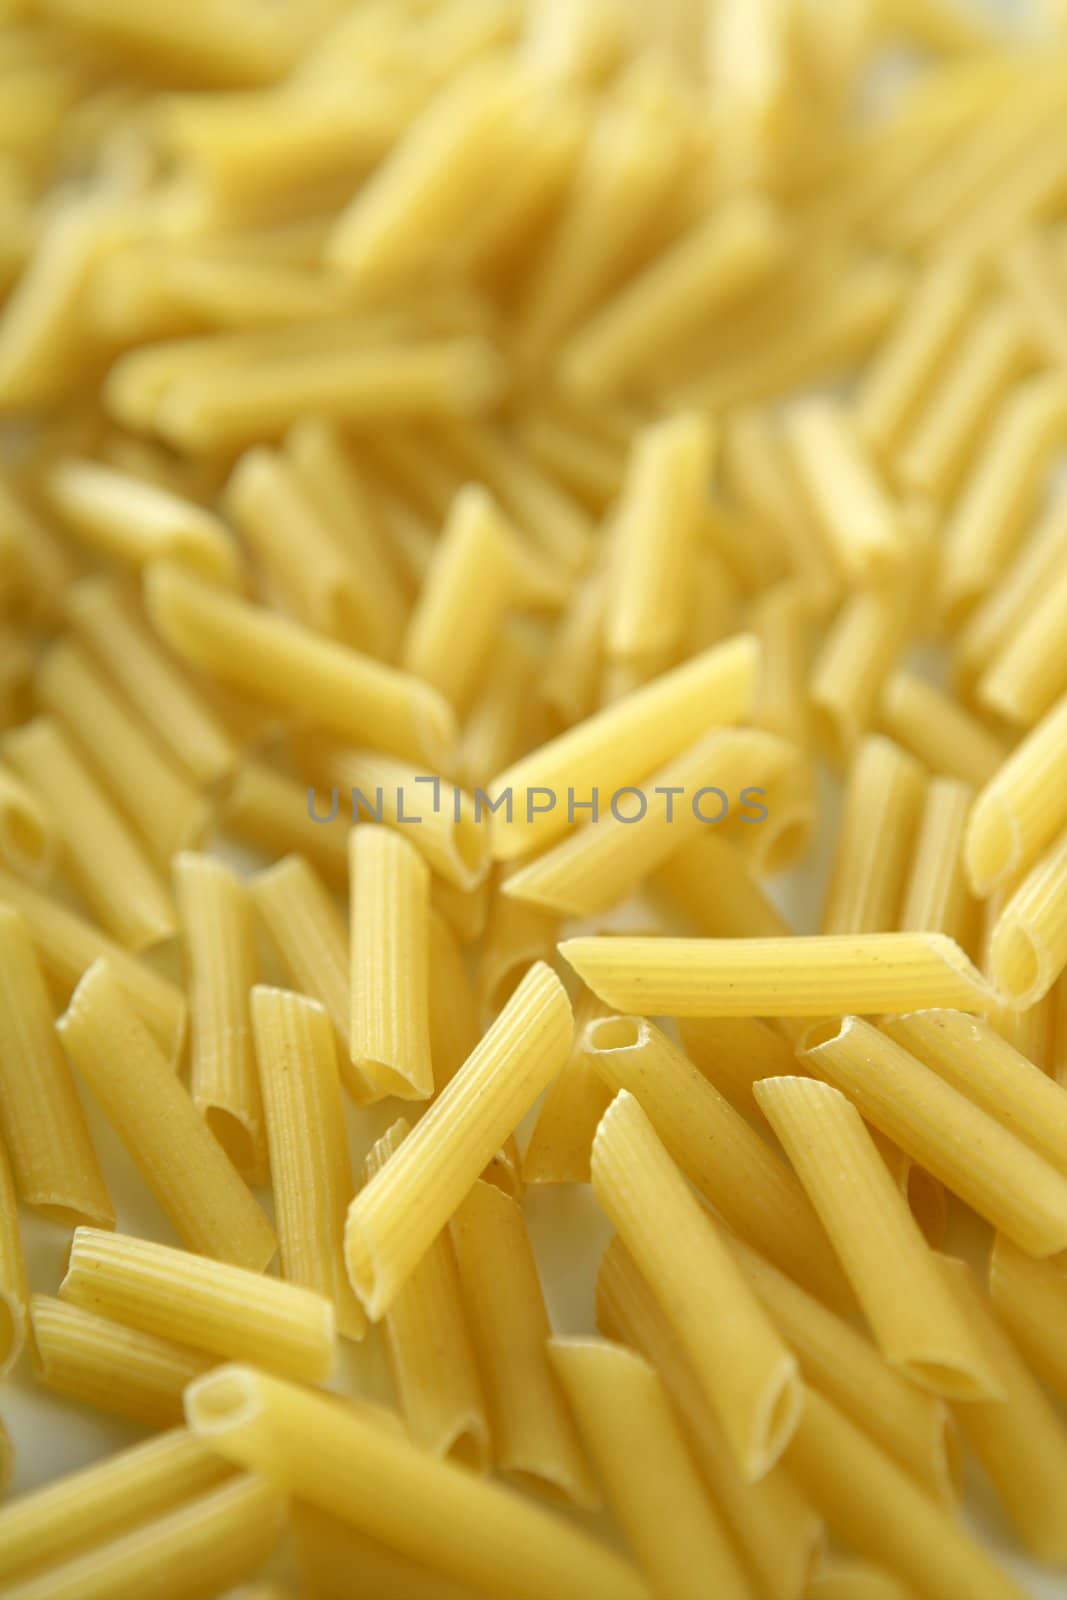 Italian macaroni, pasta texture close-up